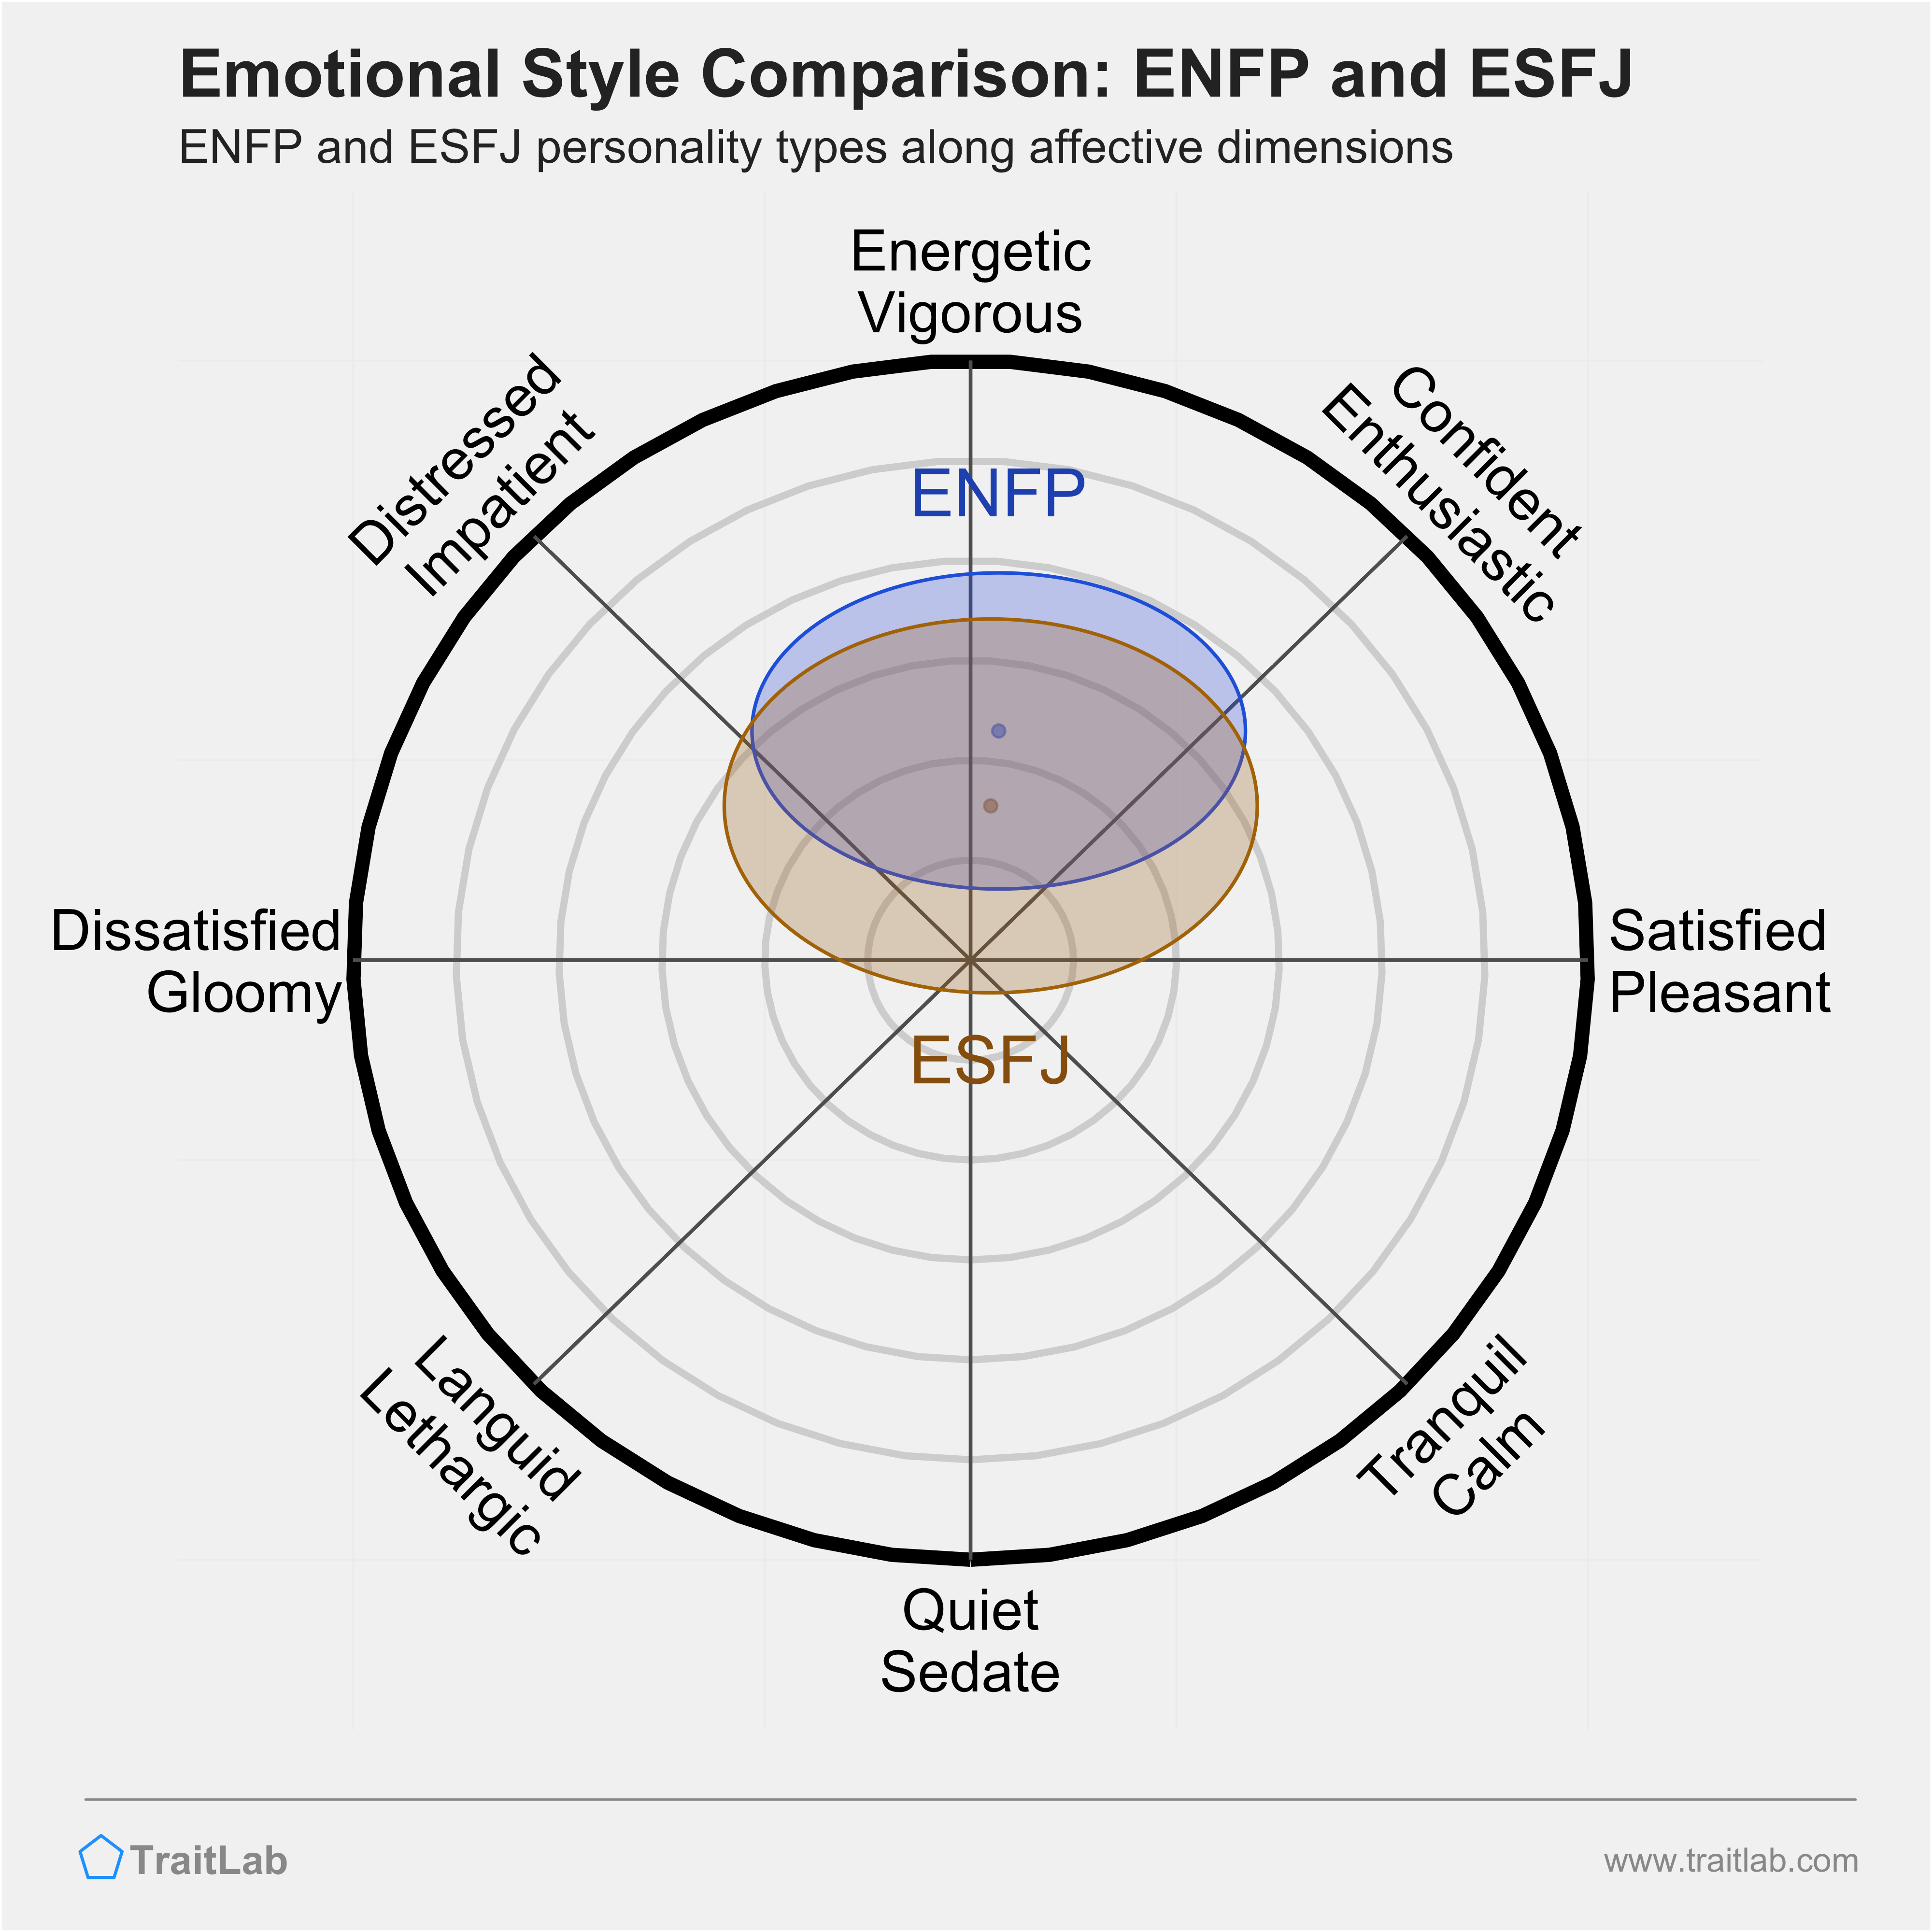 ENFP and ESFJ comparison across emotional (affective) dimensions